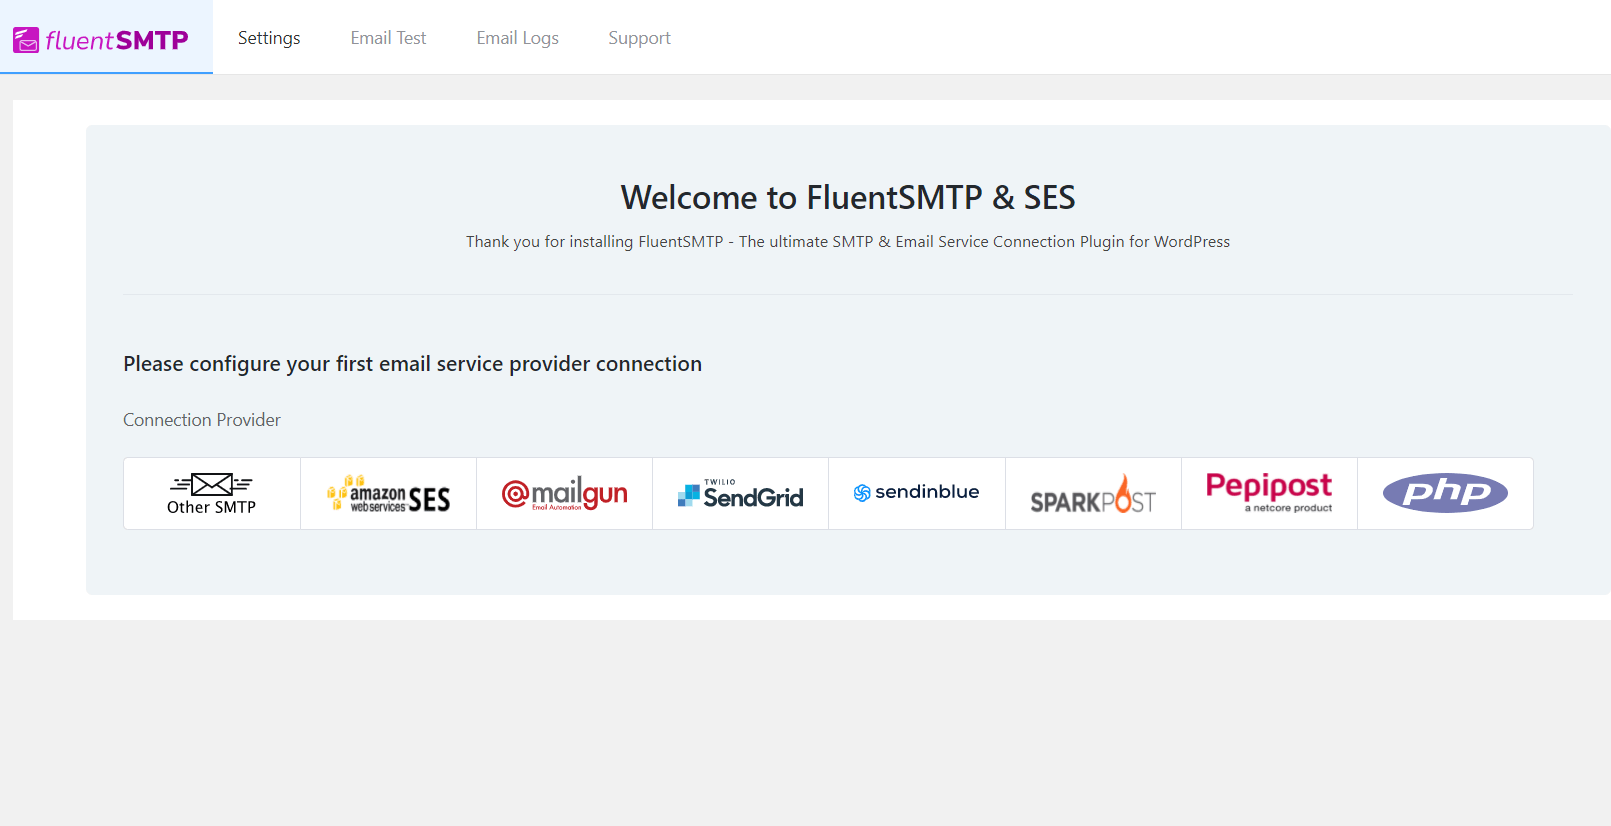 Configuring Fluent SMTP for Amazon SES